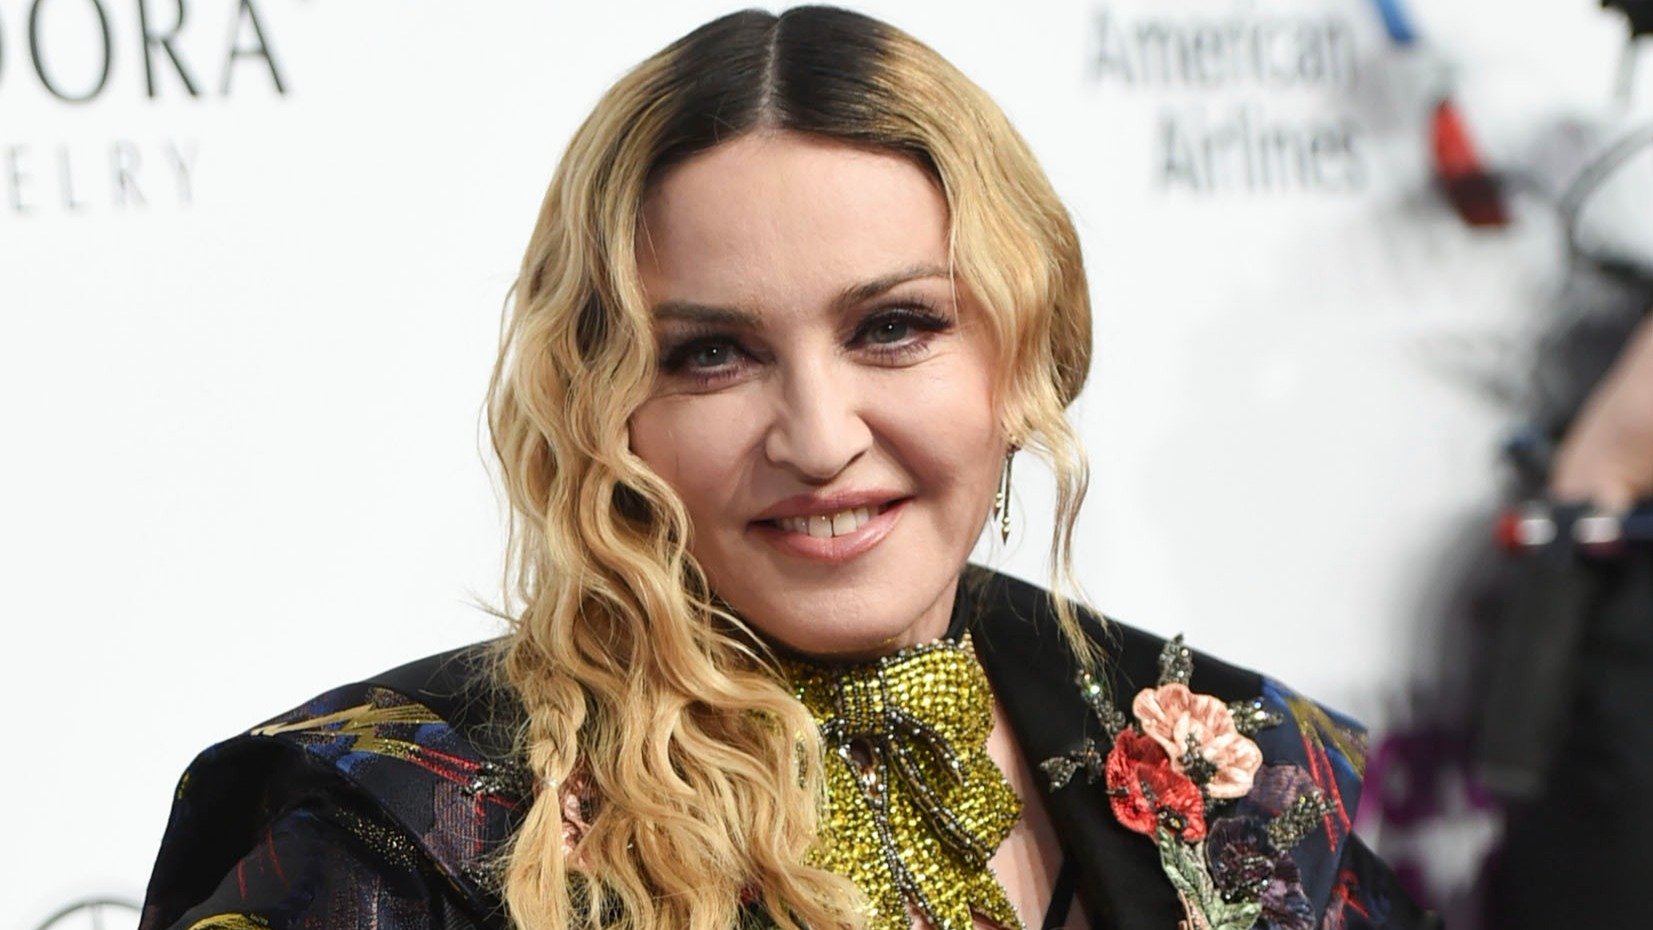 Madonna’s Health Concerns Raise Alarm Among Fans During Tour